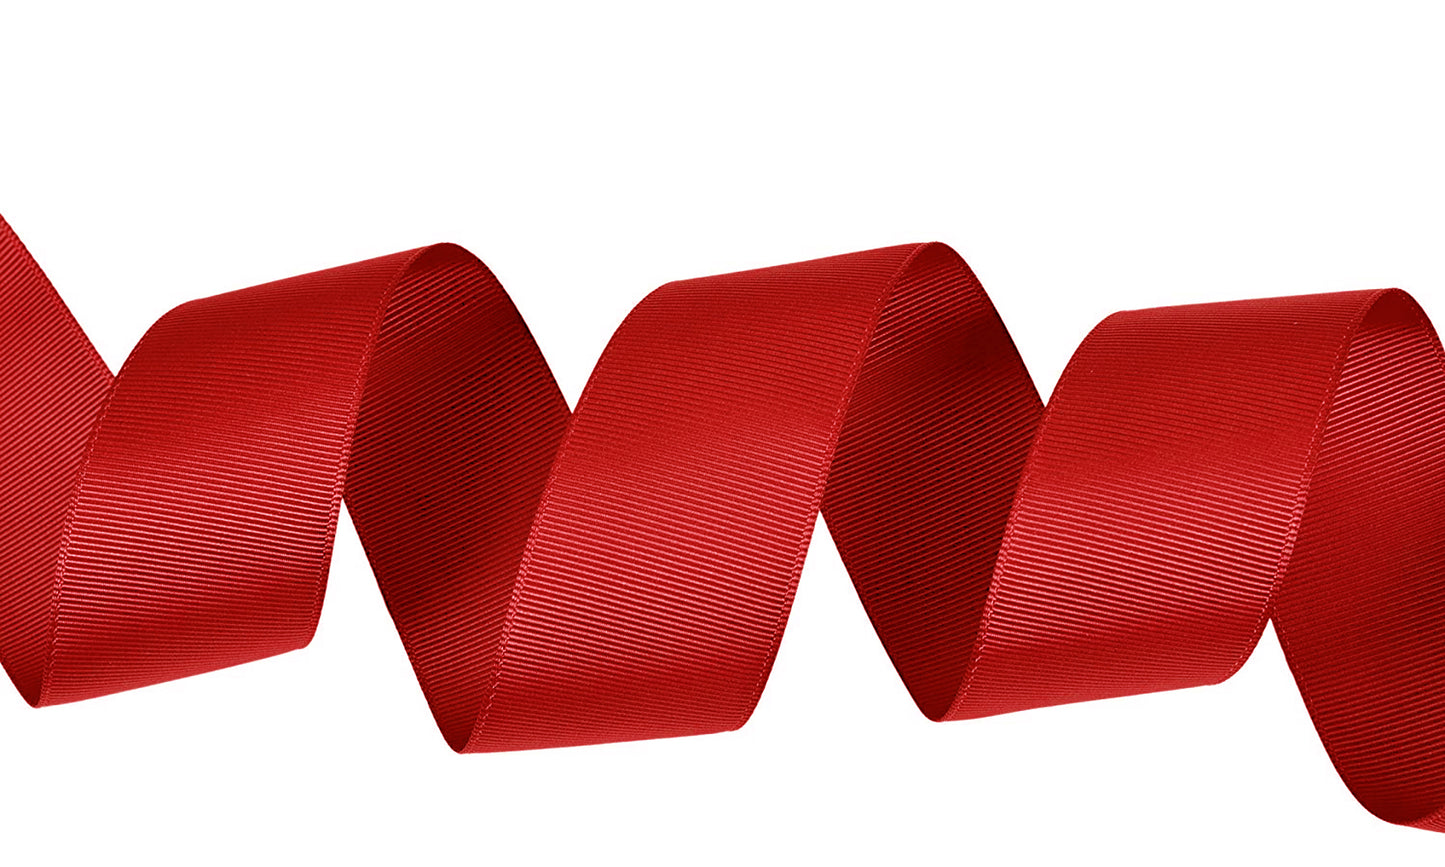 5 Yards Solid Red Grosgrain Ribbon Yardage DIY Crafts Bows Décor USA